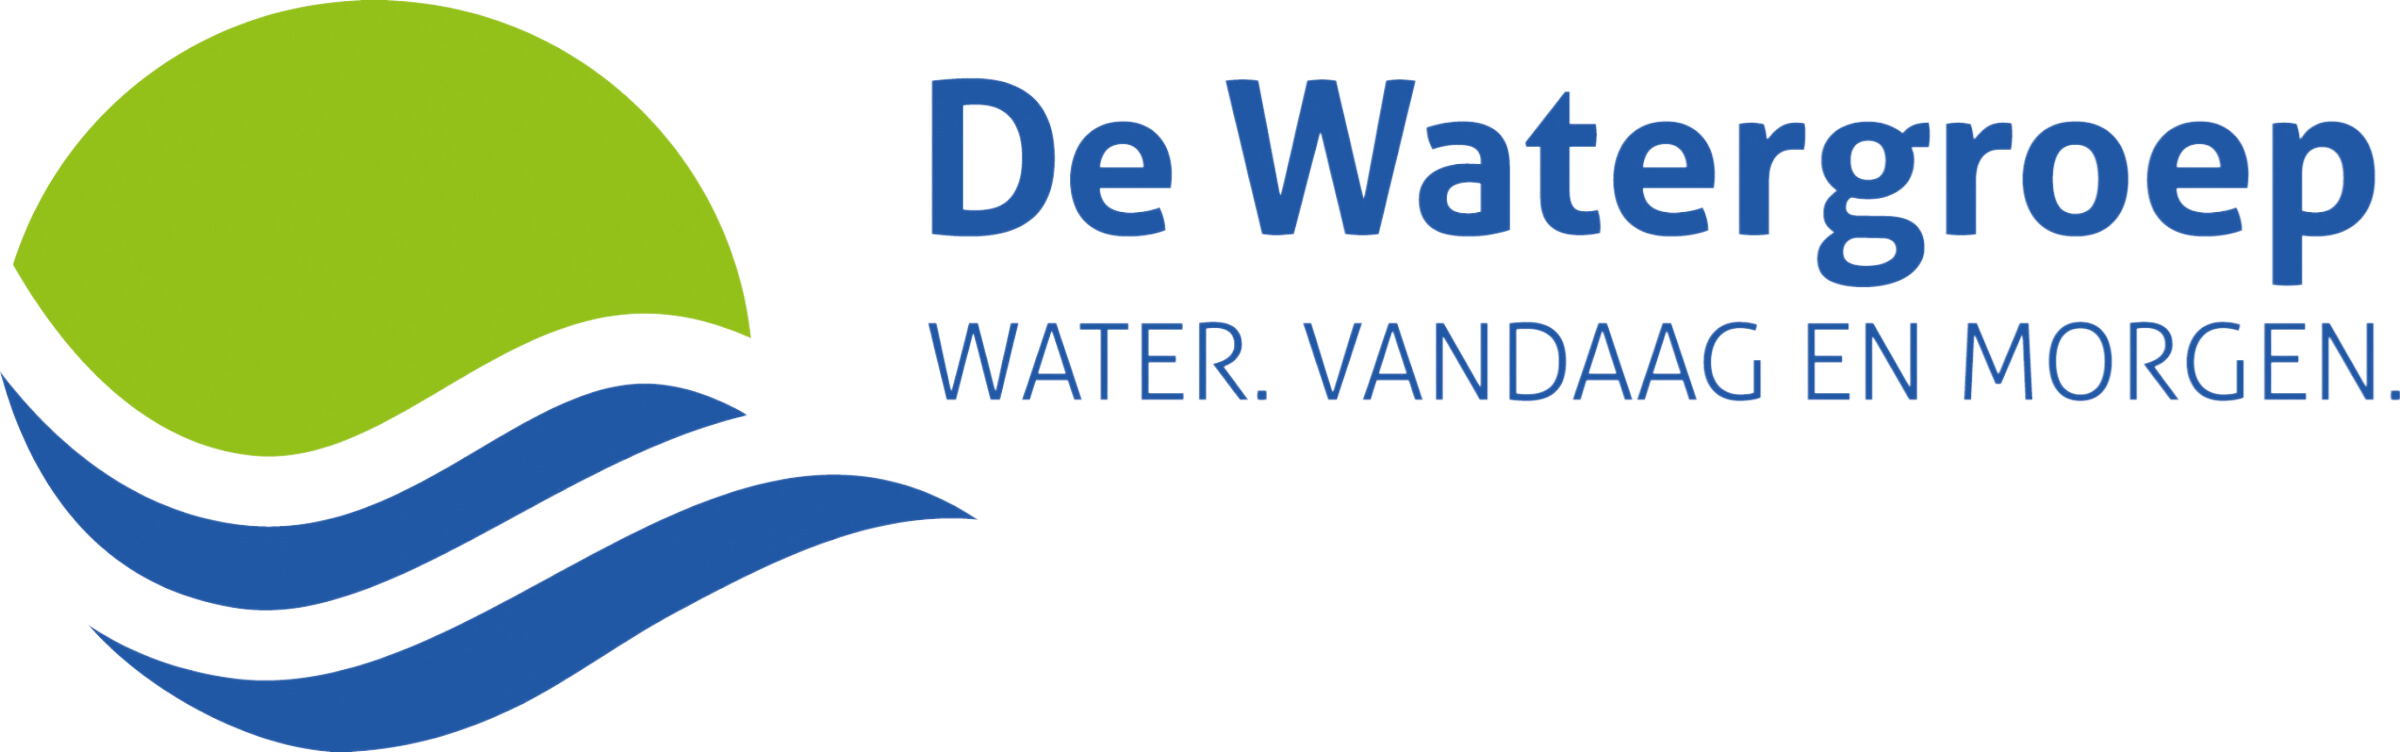 Transparant logo van De Watergroep